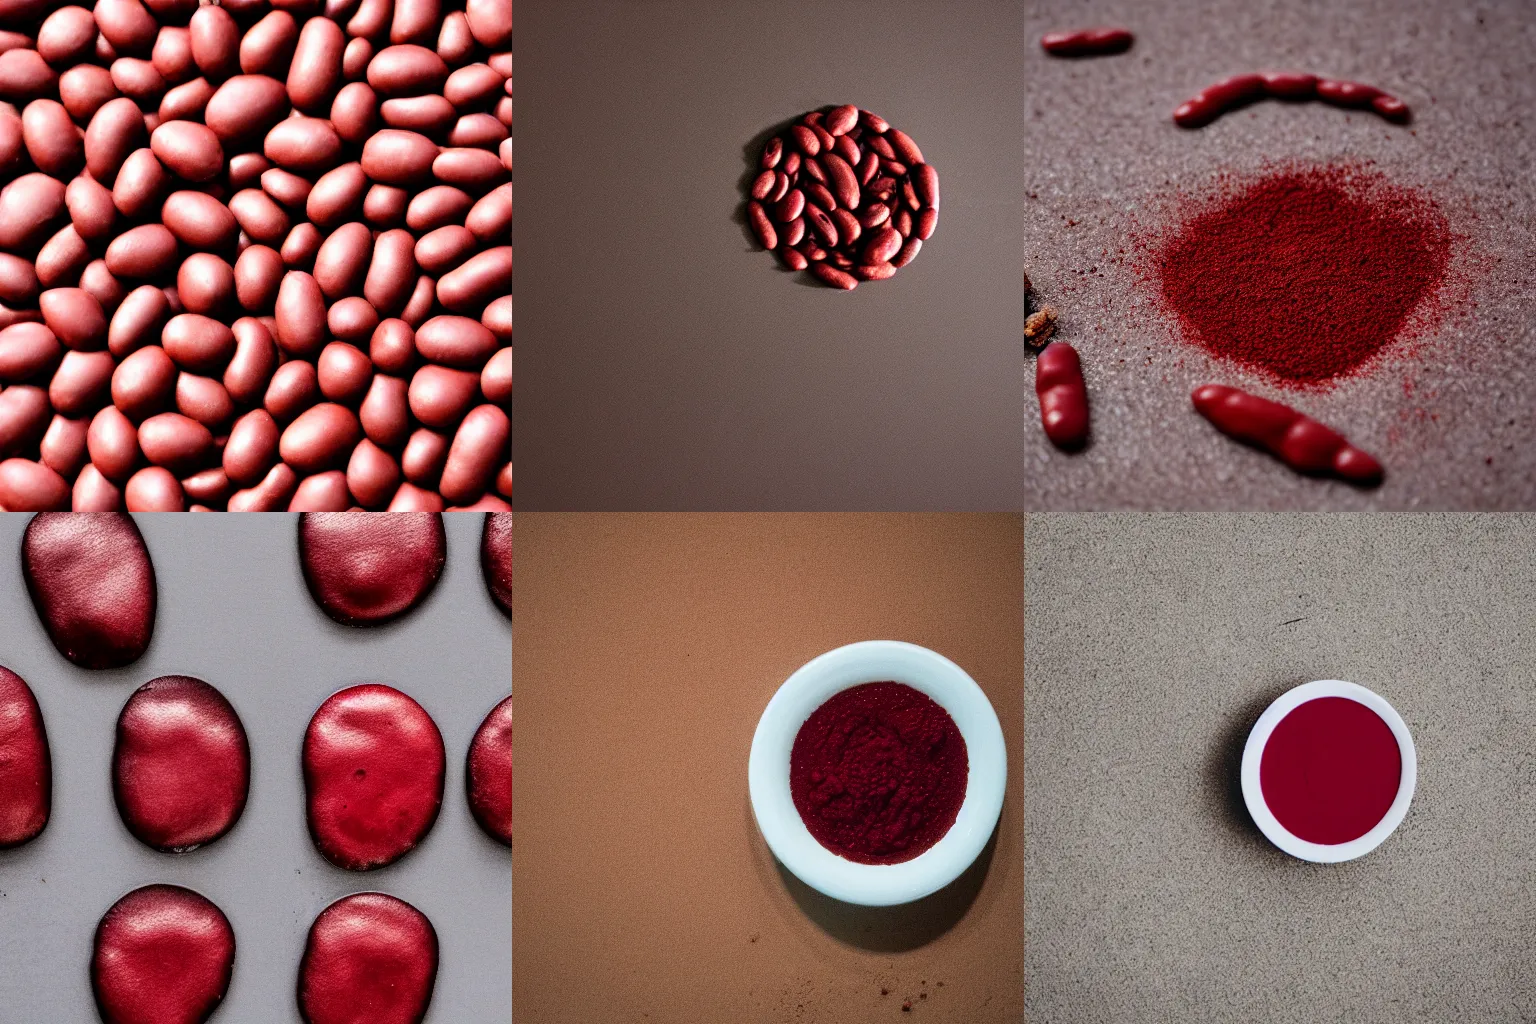 Prompt: red bean, minimalist photo